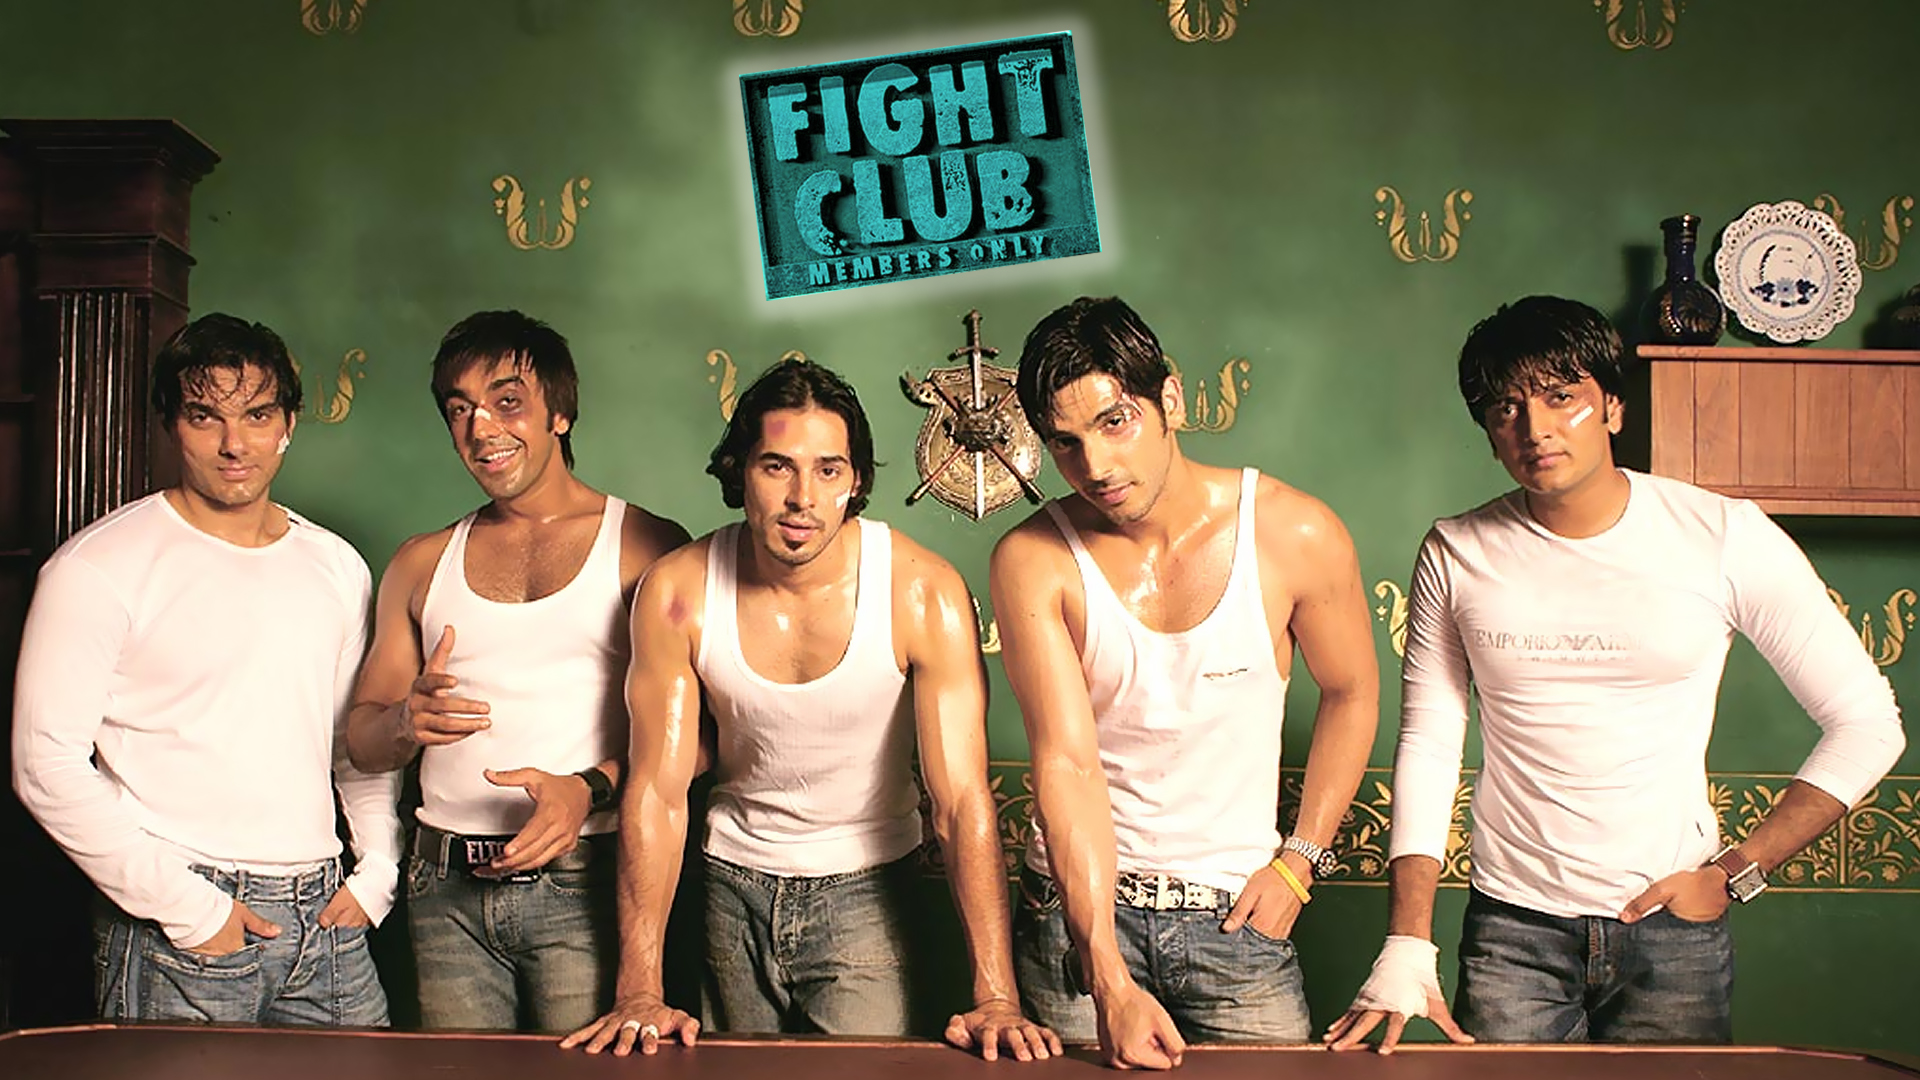 chitra dhar add fight club full movie hindi photo